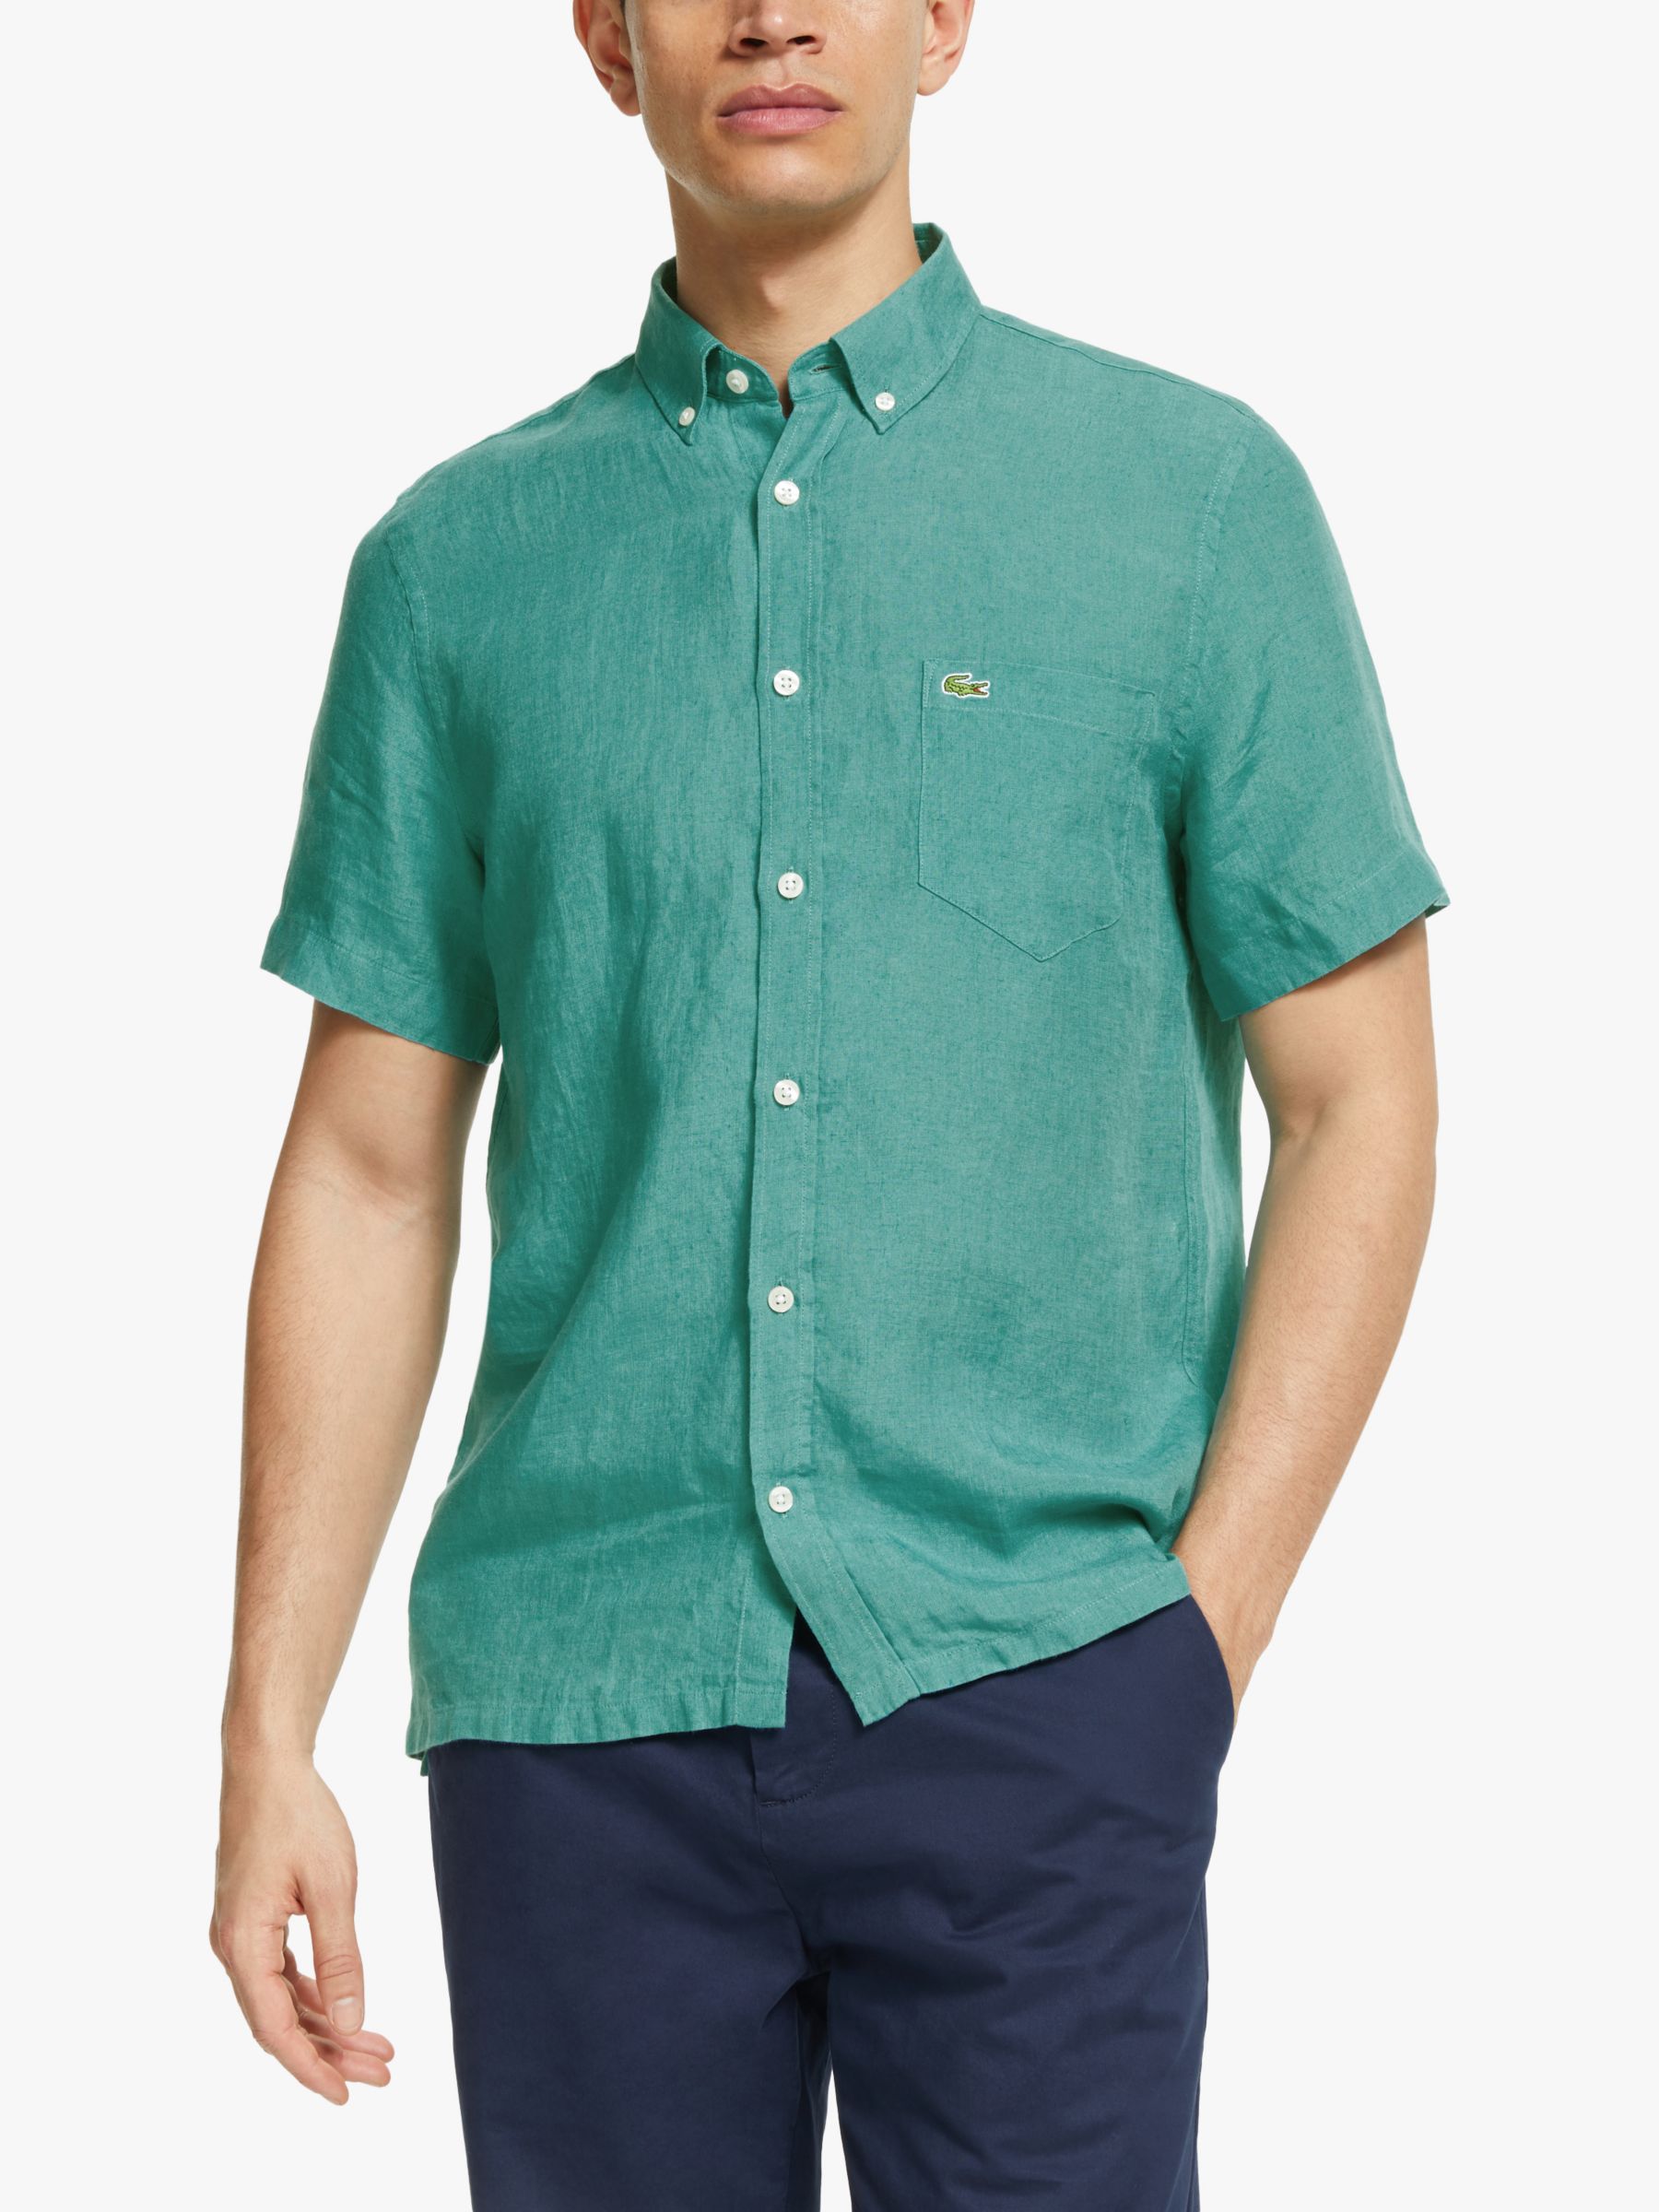 Lacoste Short Sleeve Linen Shirt, Niagara Blue at John Lewis & Partners